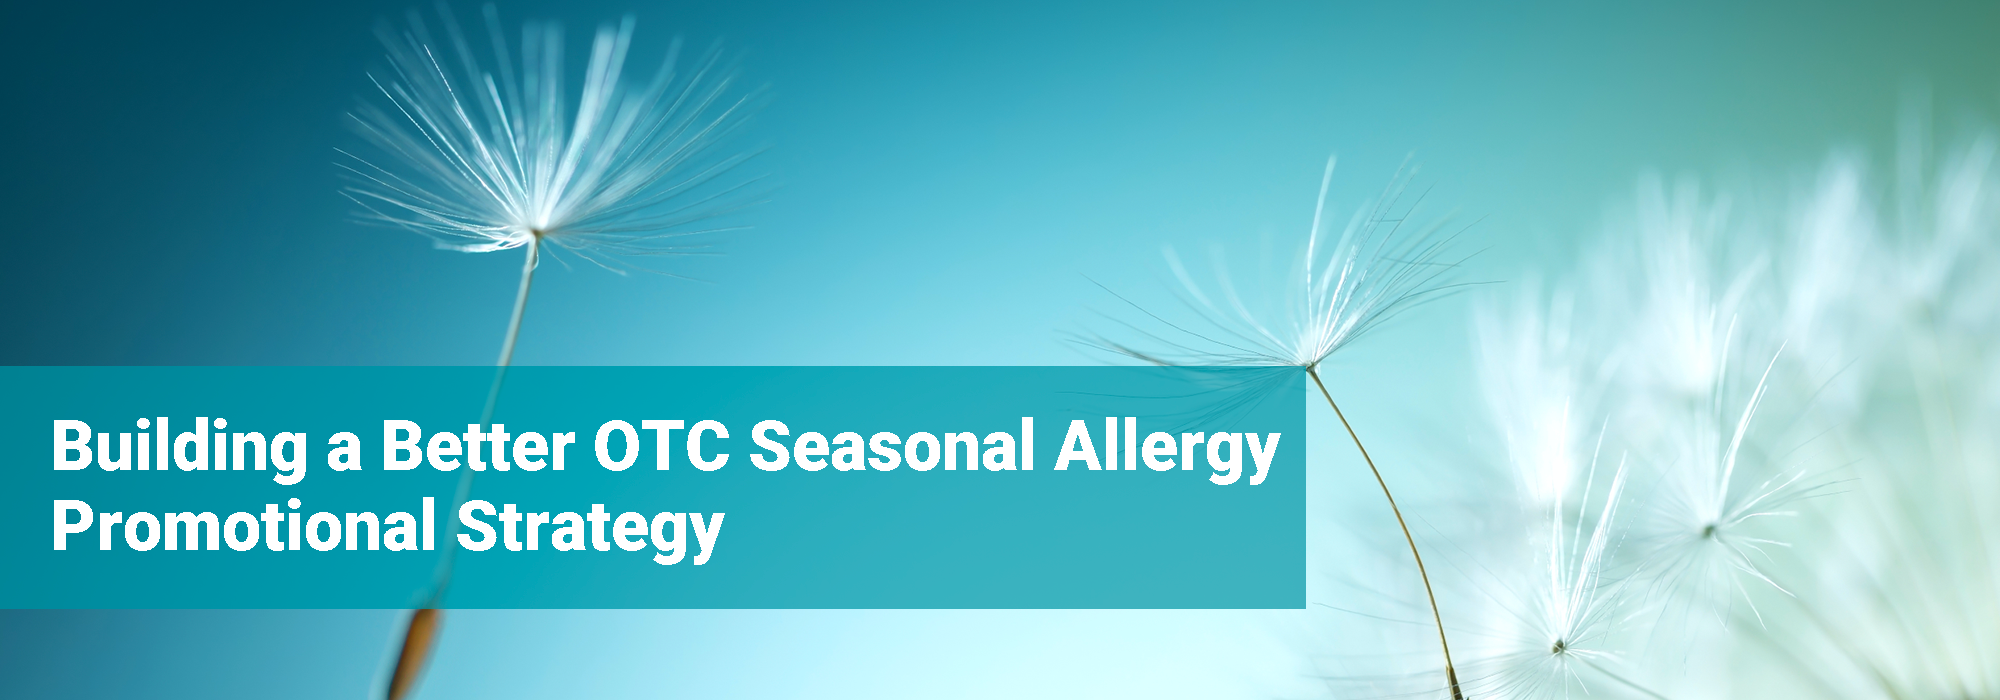 Building a Better OTC Seasonal Allergy Promotional Strategy